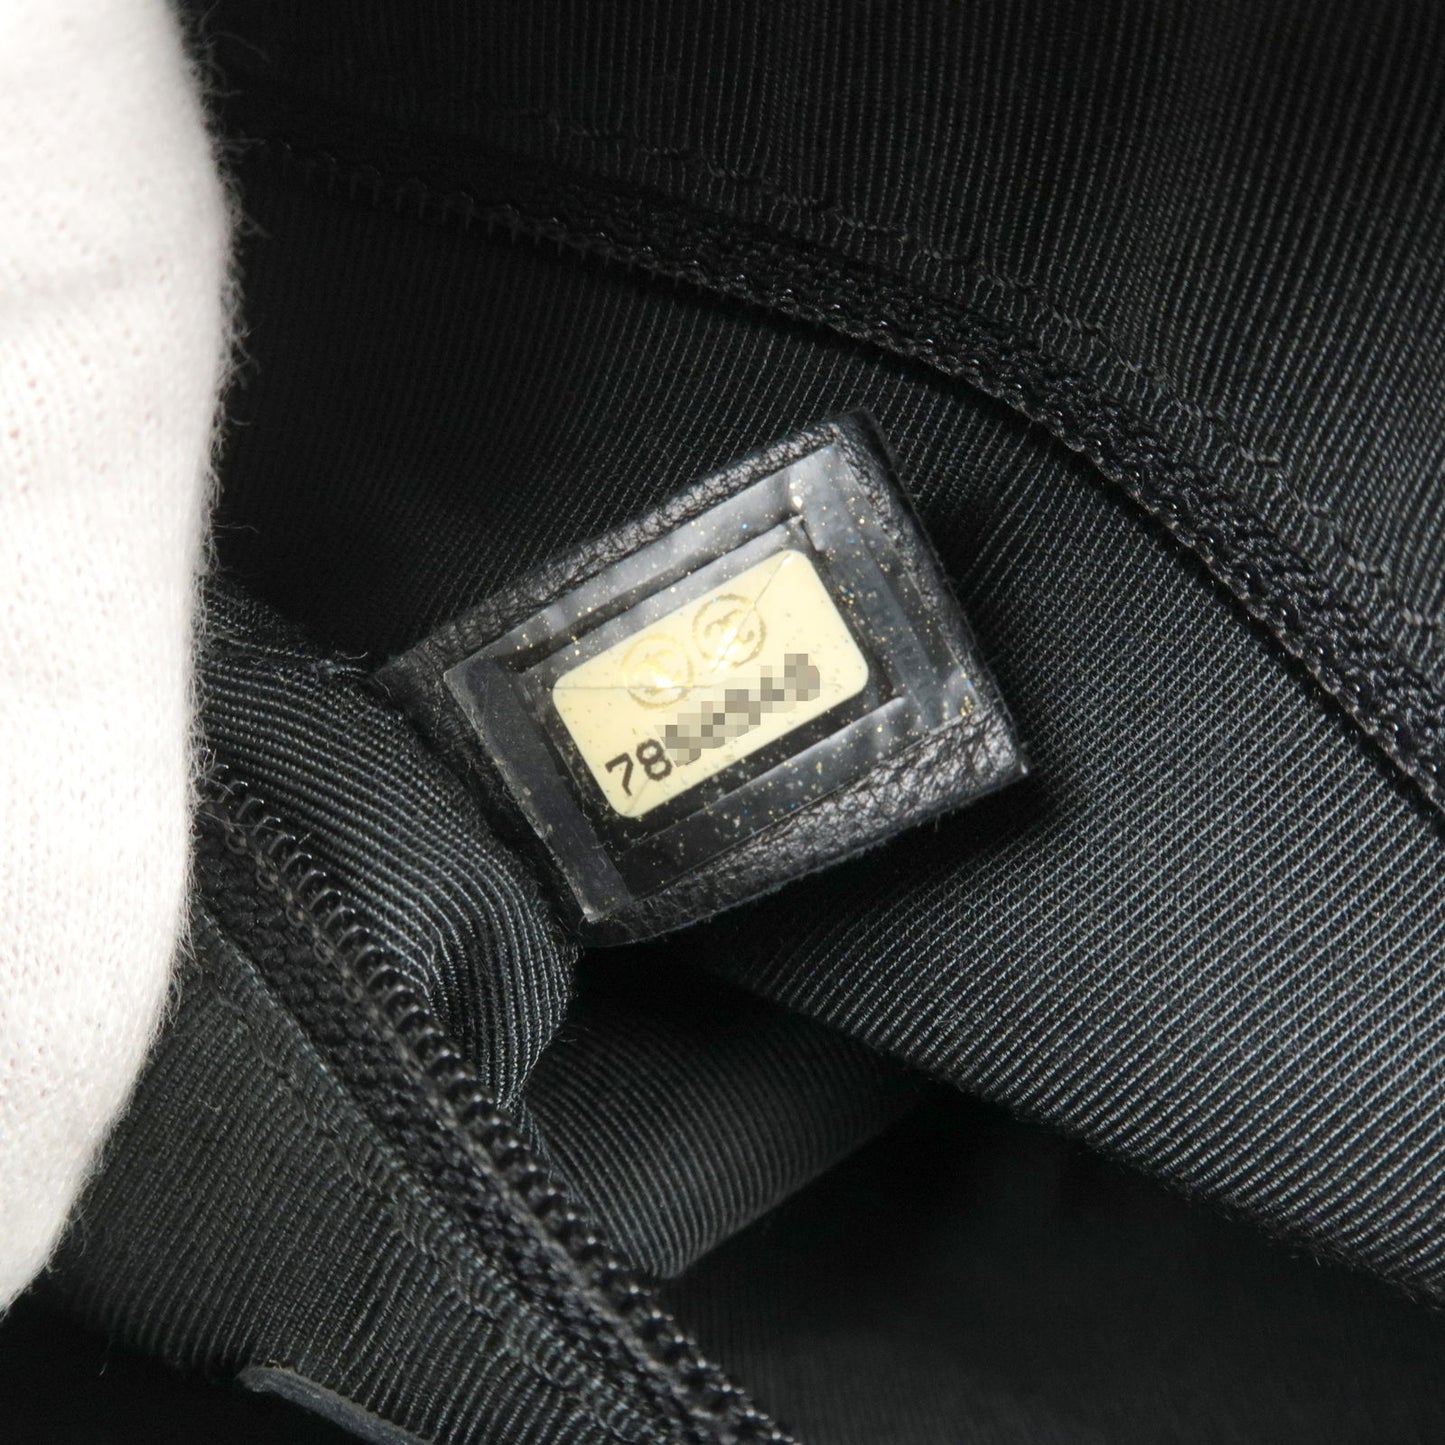 CHANEL Matelasse Caviar Skin Chain Tote Bag Black A18004